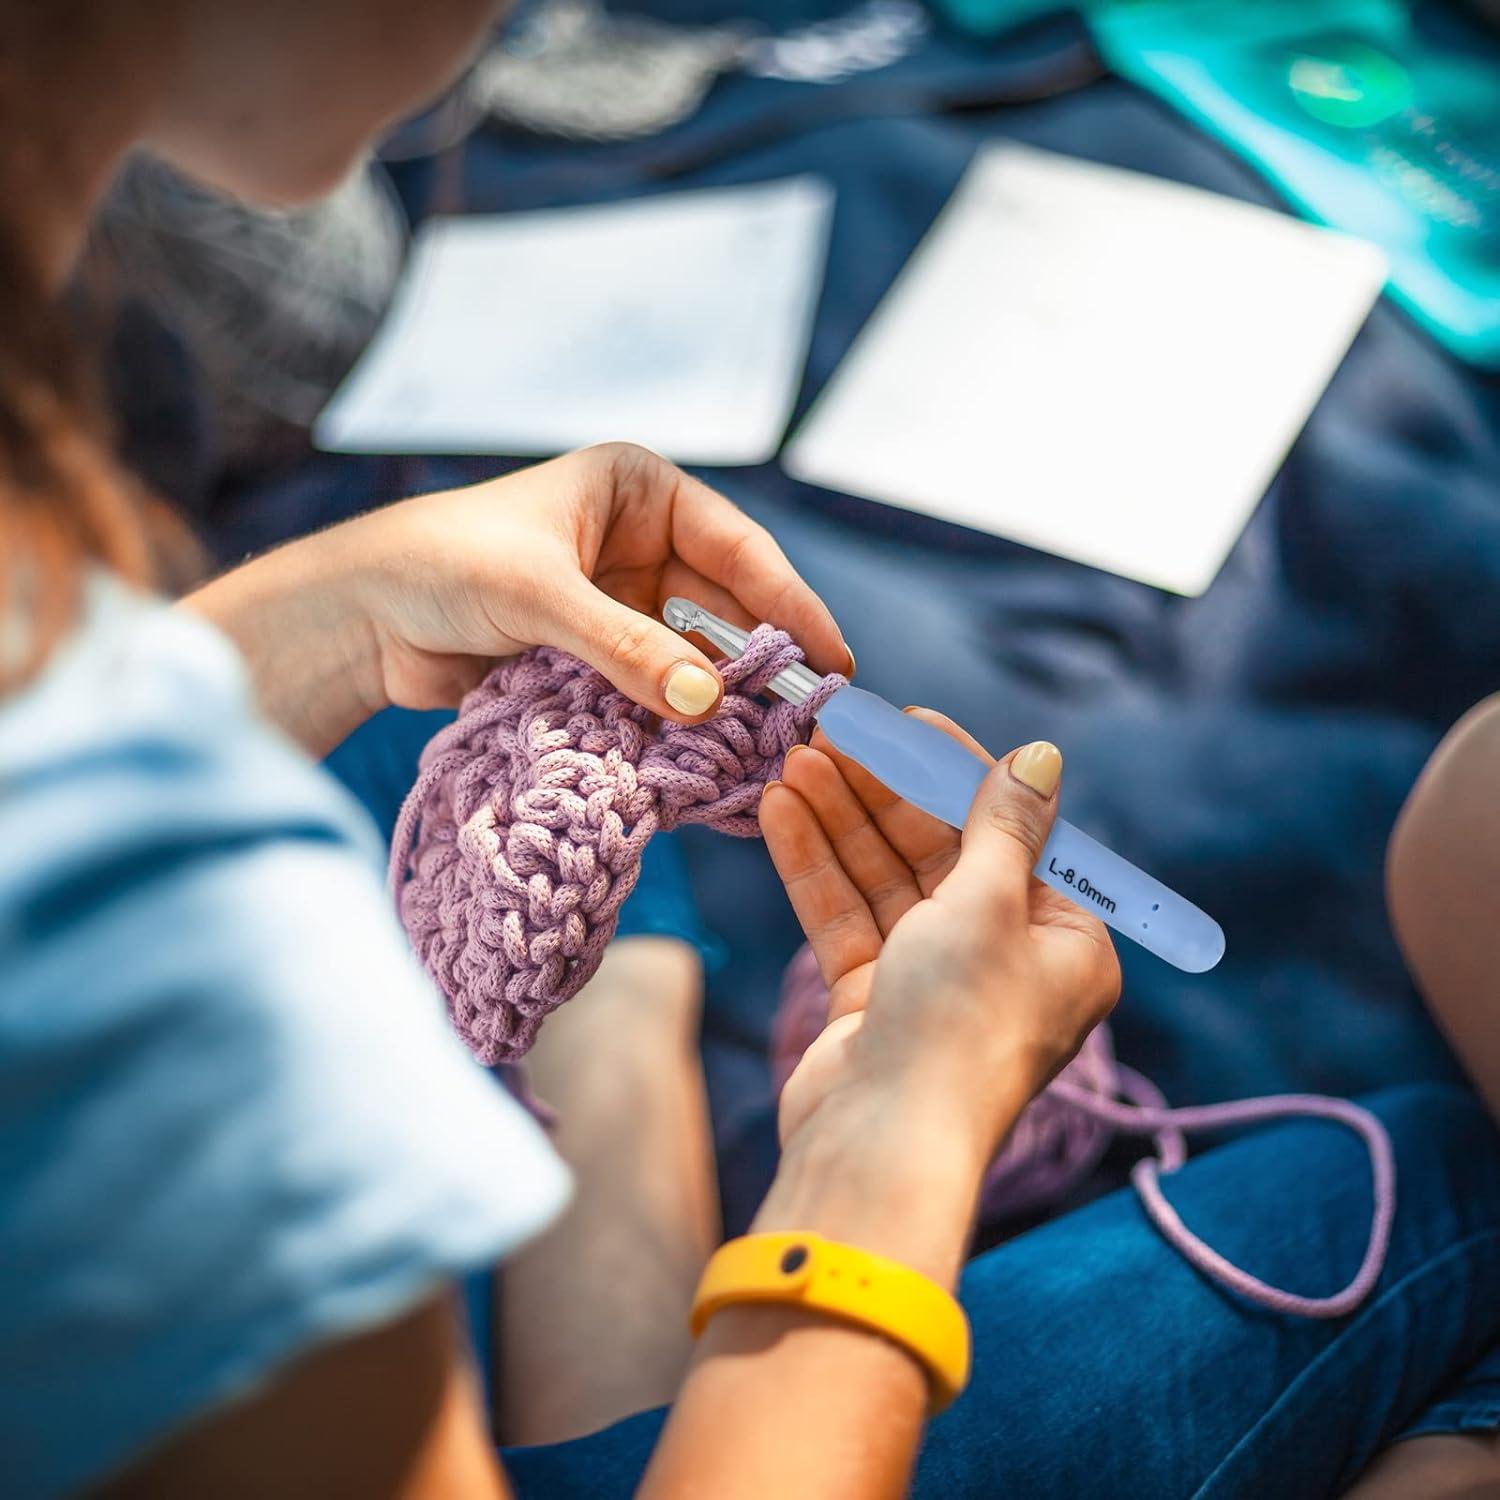 2mm Ergonomic Crochet Hook, Crochet Needles for Crocheting, Smooth Knitting  Needles for Handmade DIY, Great Gift for Women with Arthritic Hands